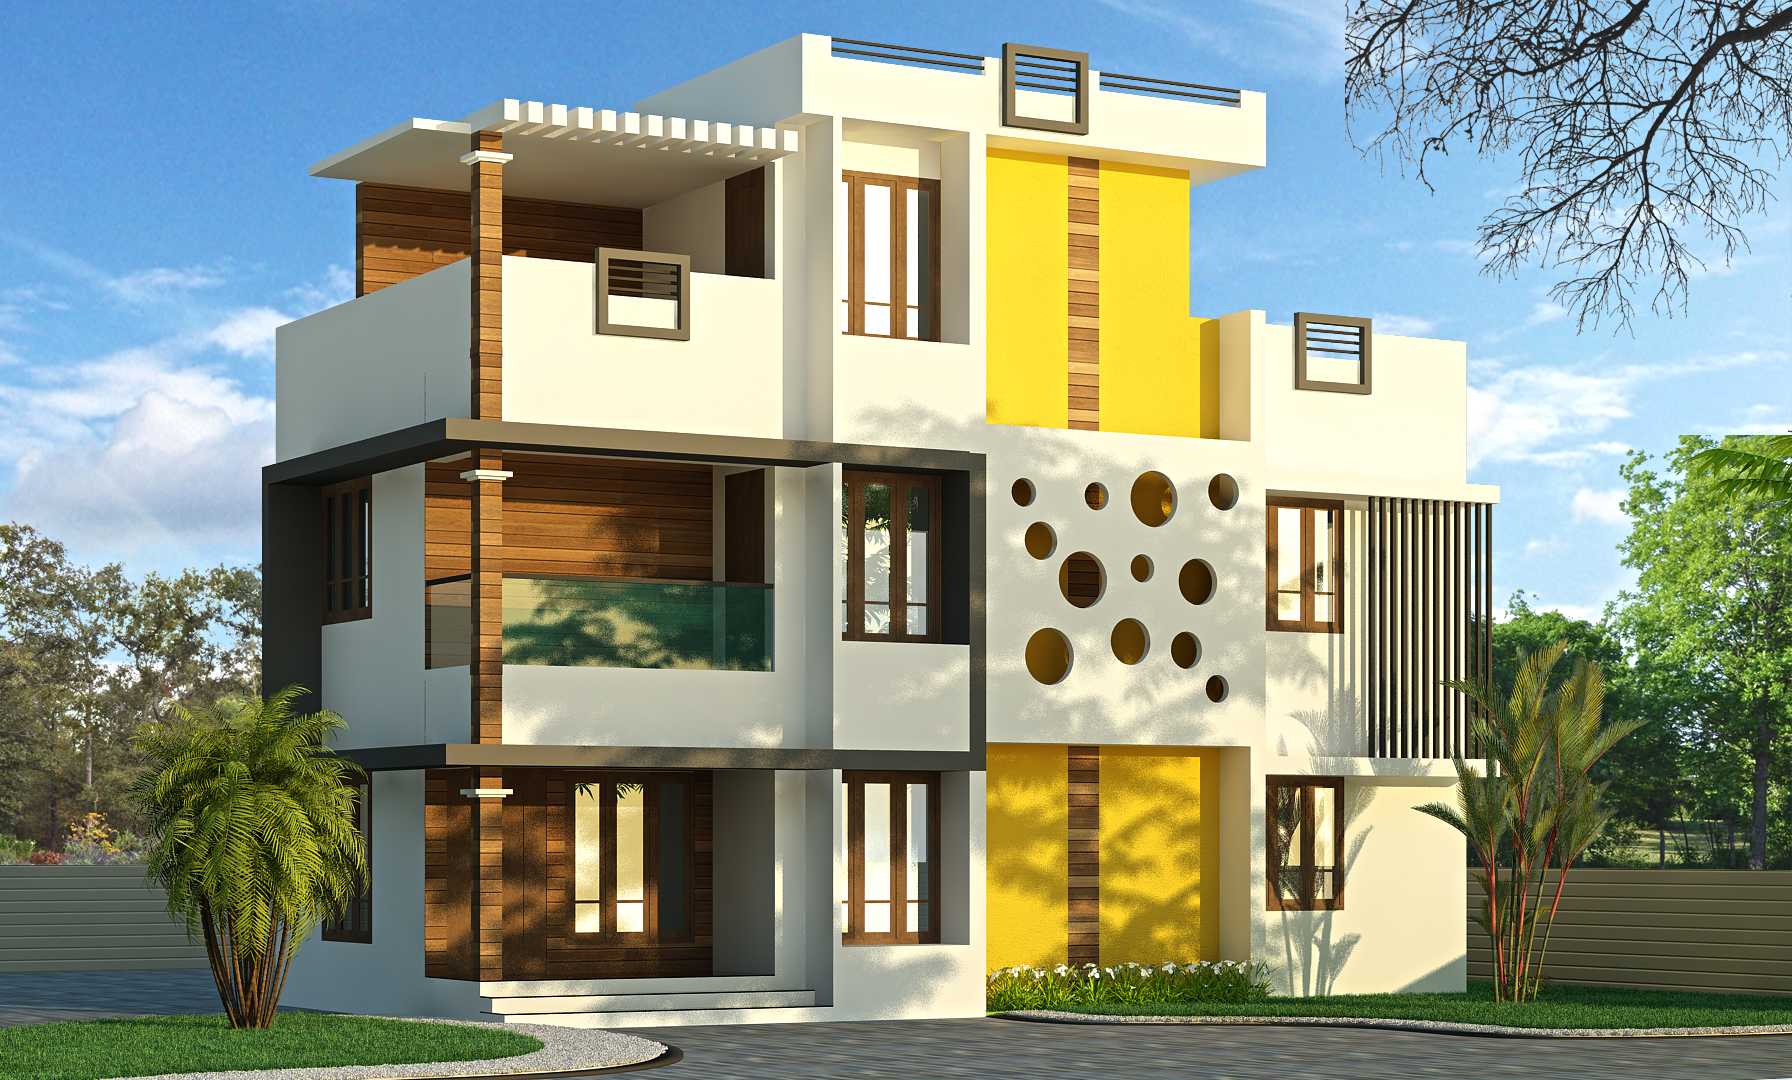 Home elevation designs